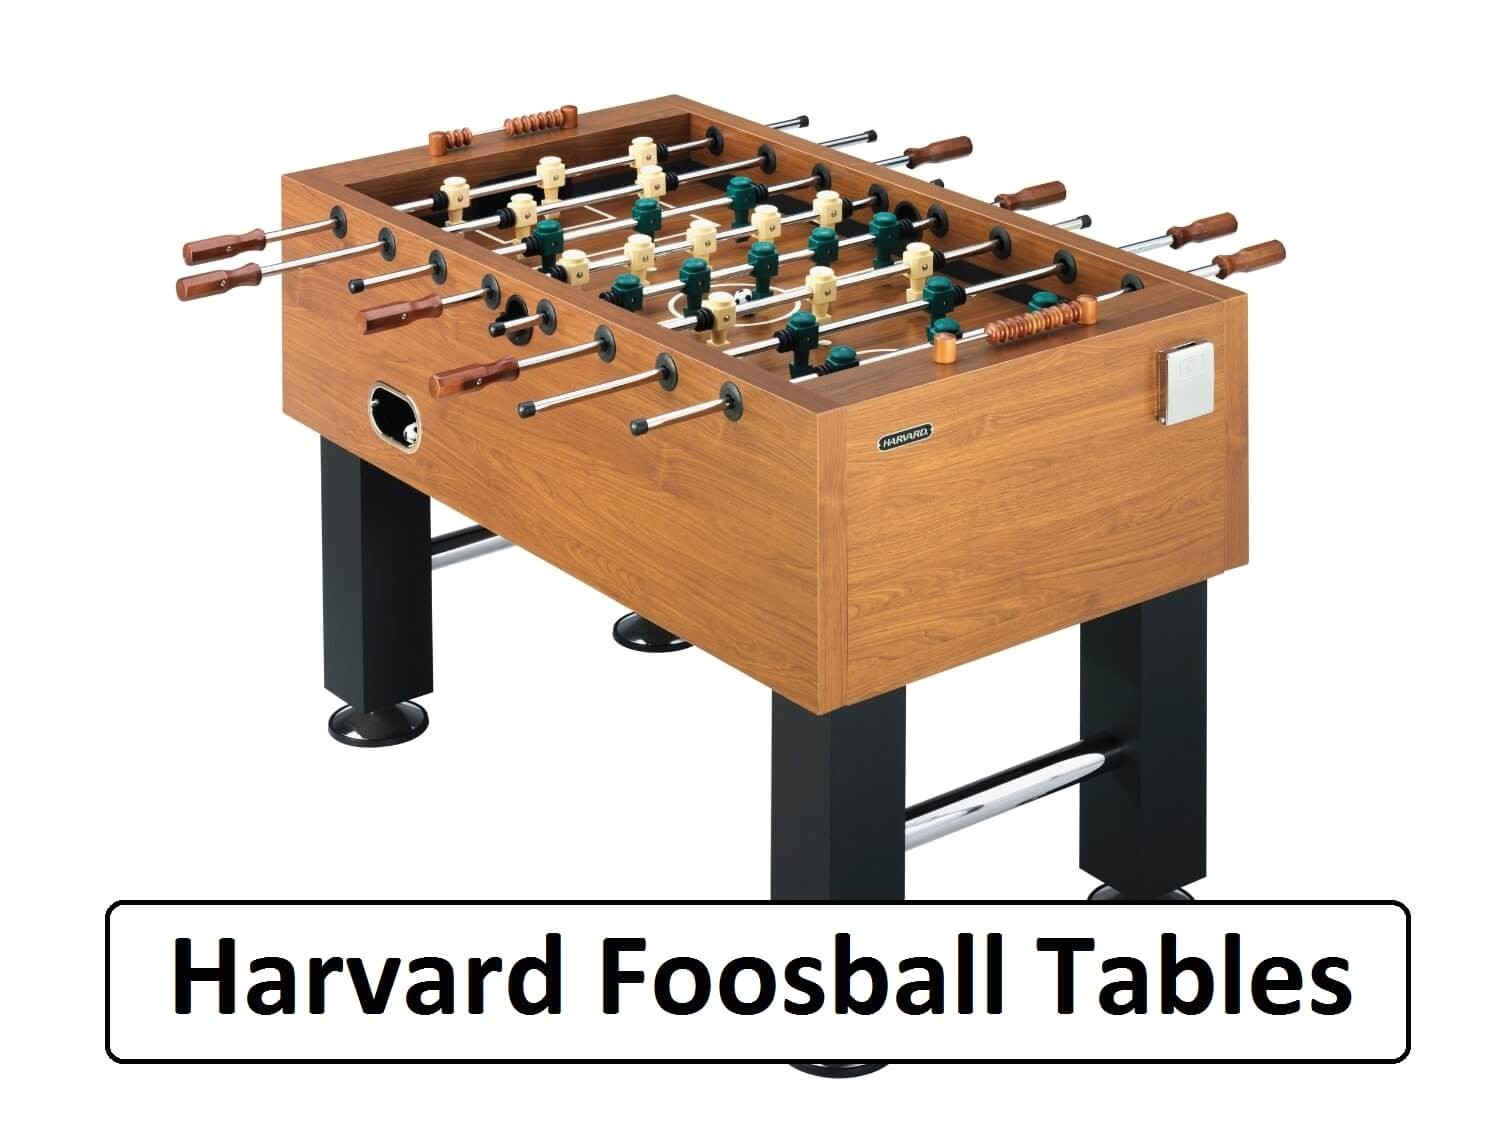 Harvard Foosball Table Parts Best Harvard Foosball Table for Your Fun Times